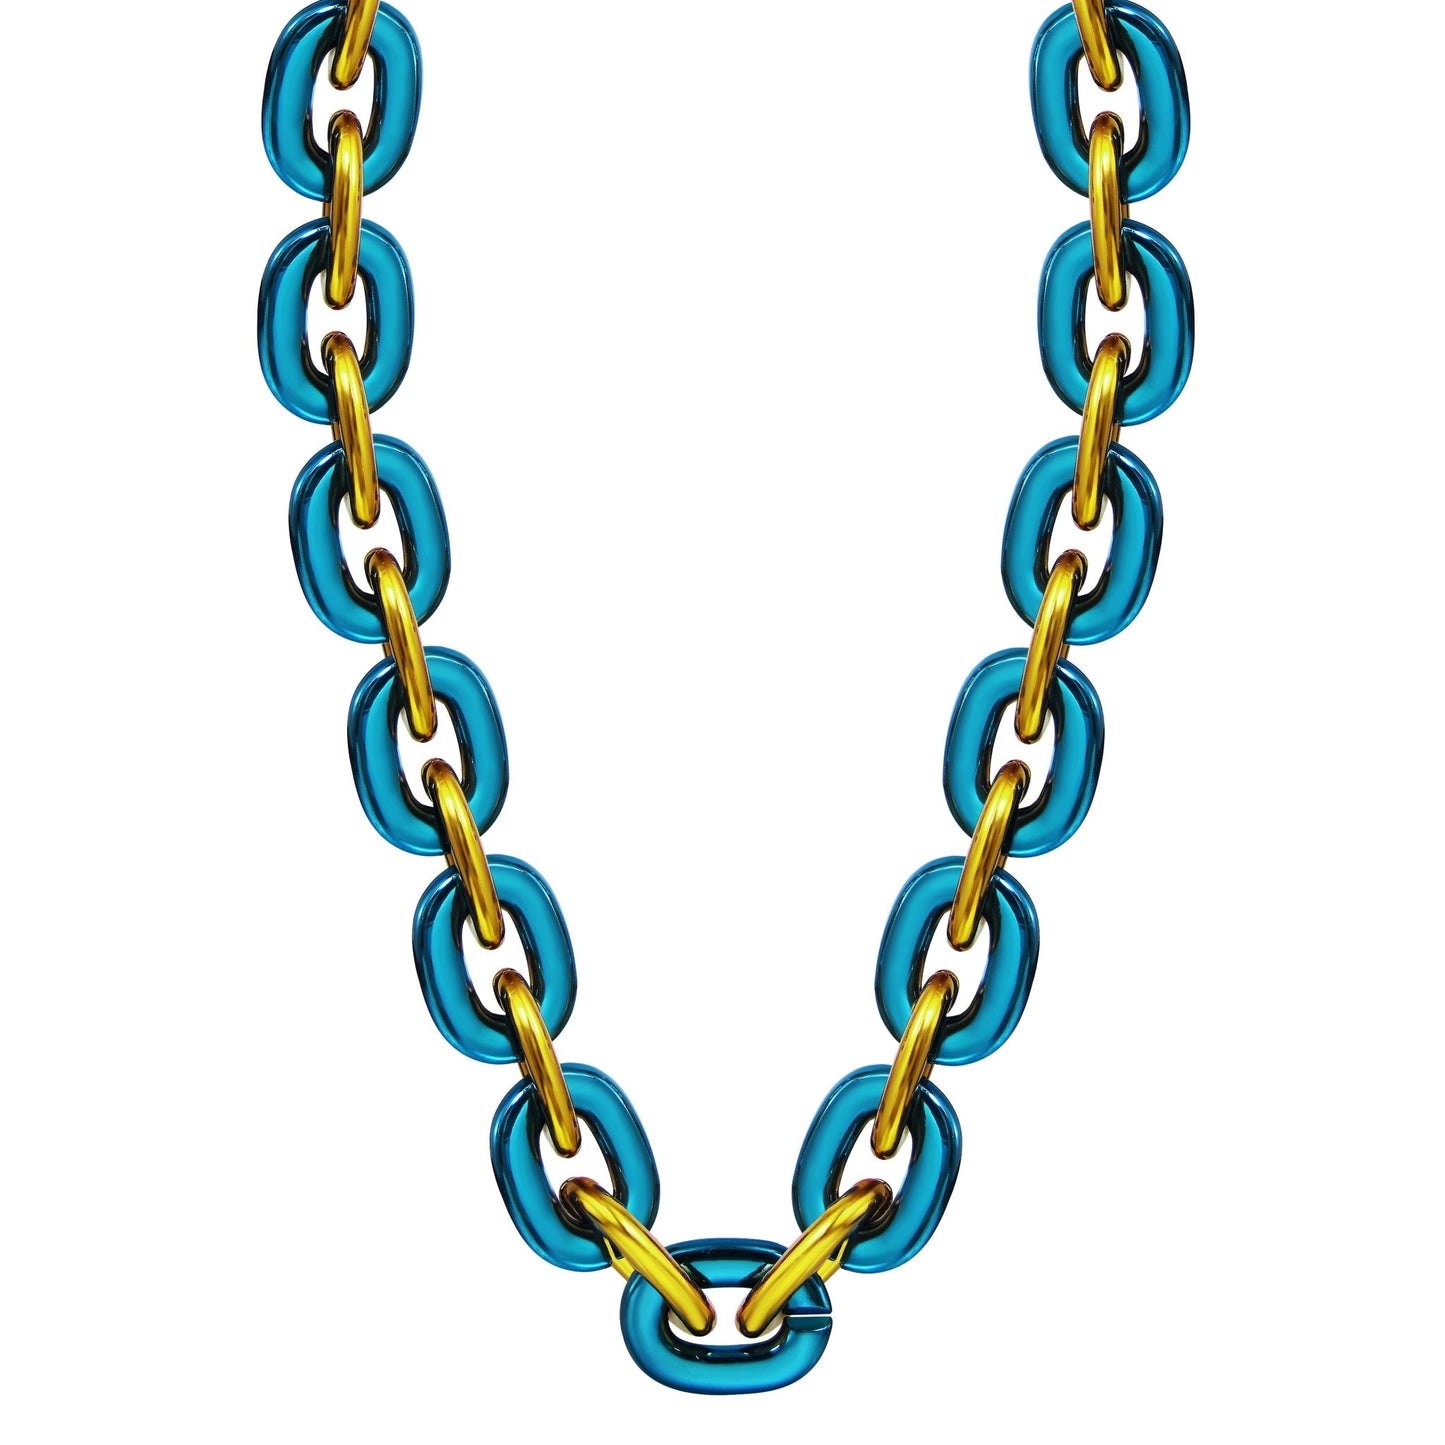 Jumbo Fan Chain Necklace - Gamedays Gear - Navy / Gold